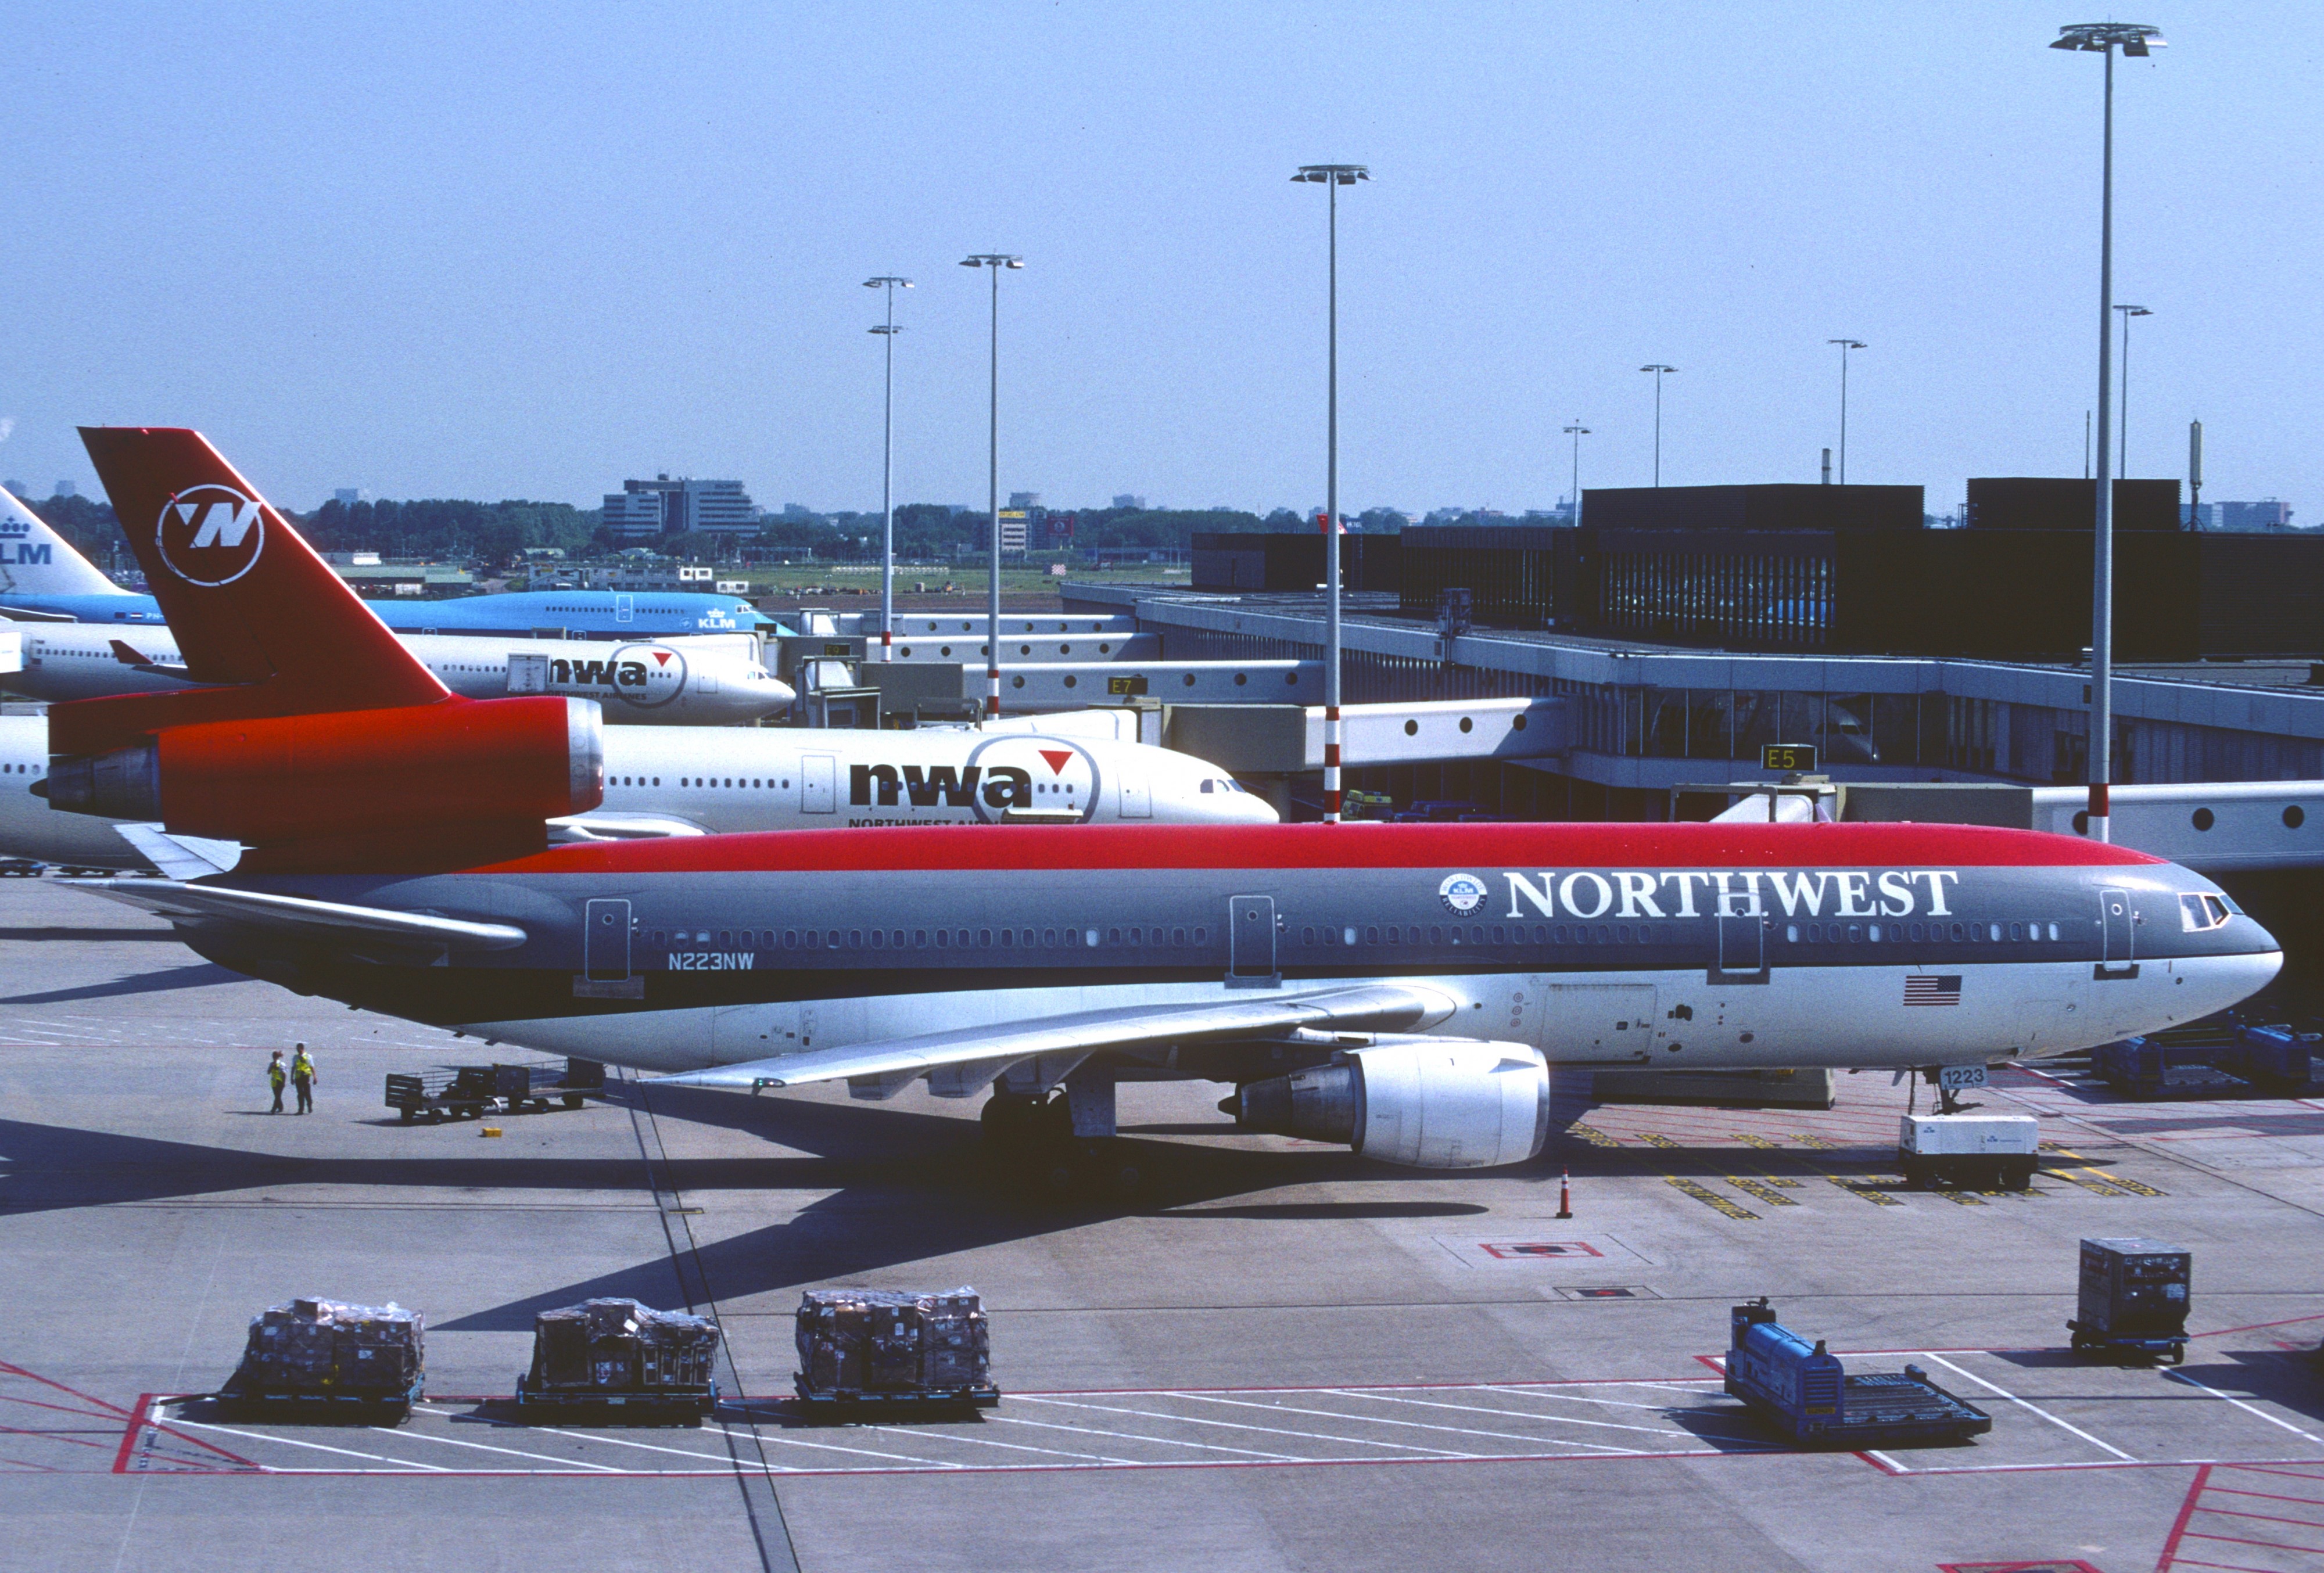 356cd - Northwest Airlines DC-10-30, N223NW@AMS,28.05.2005 - Flickr - Aero Icarus